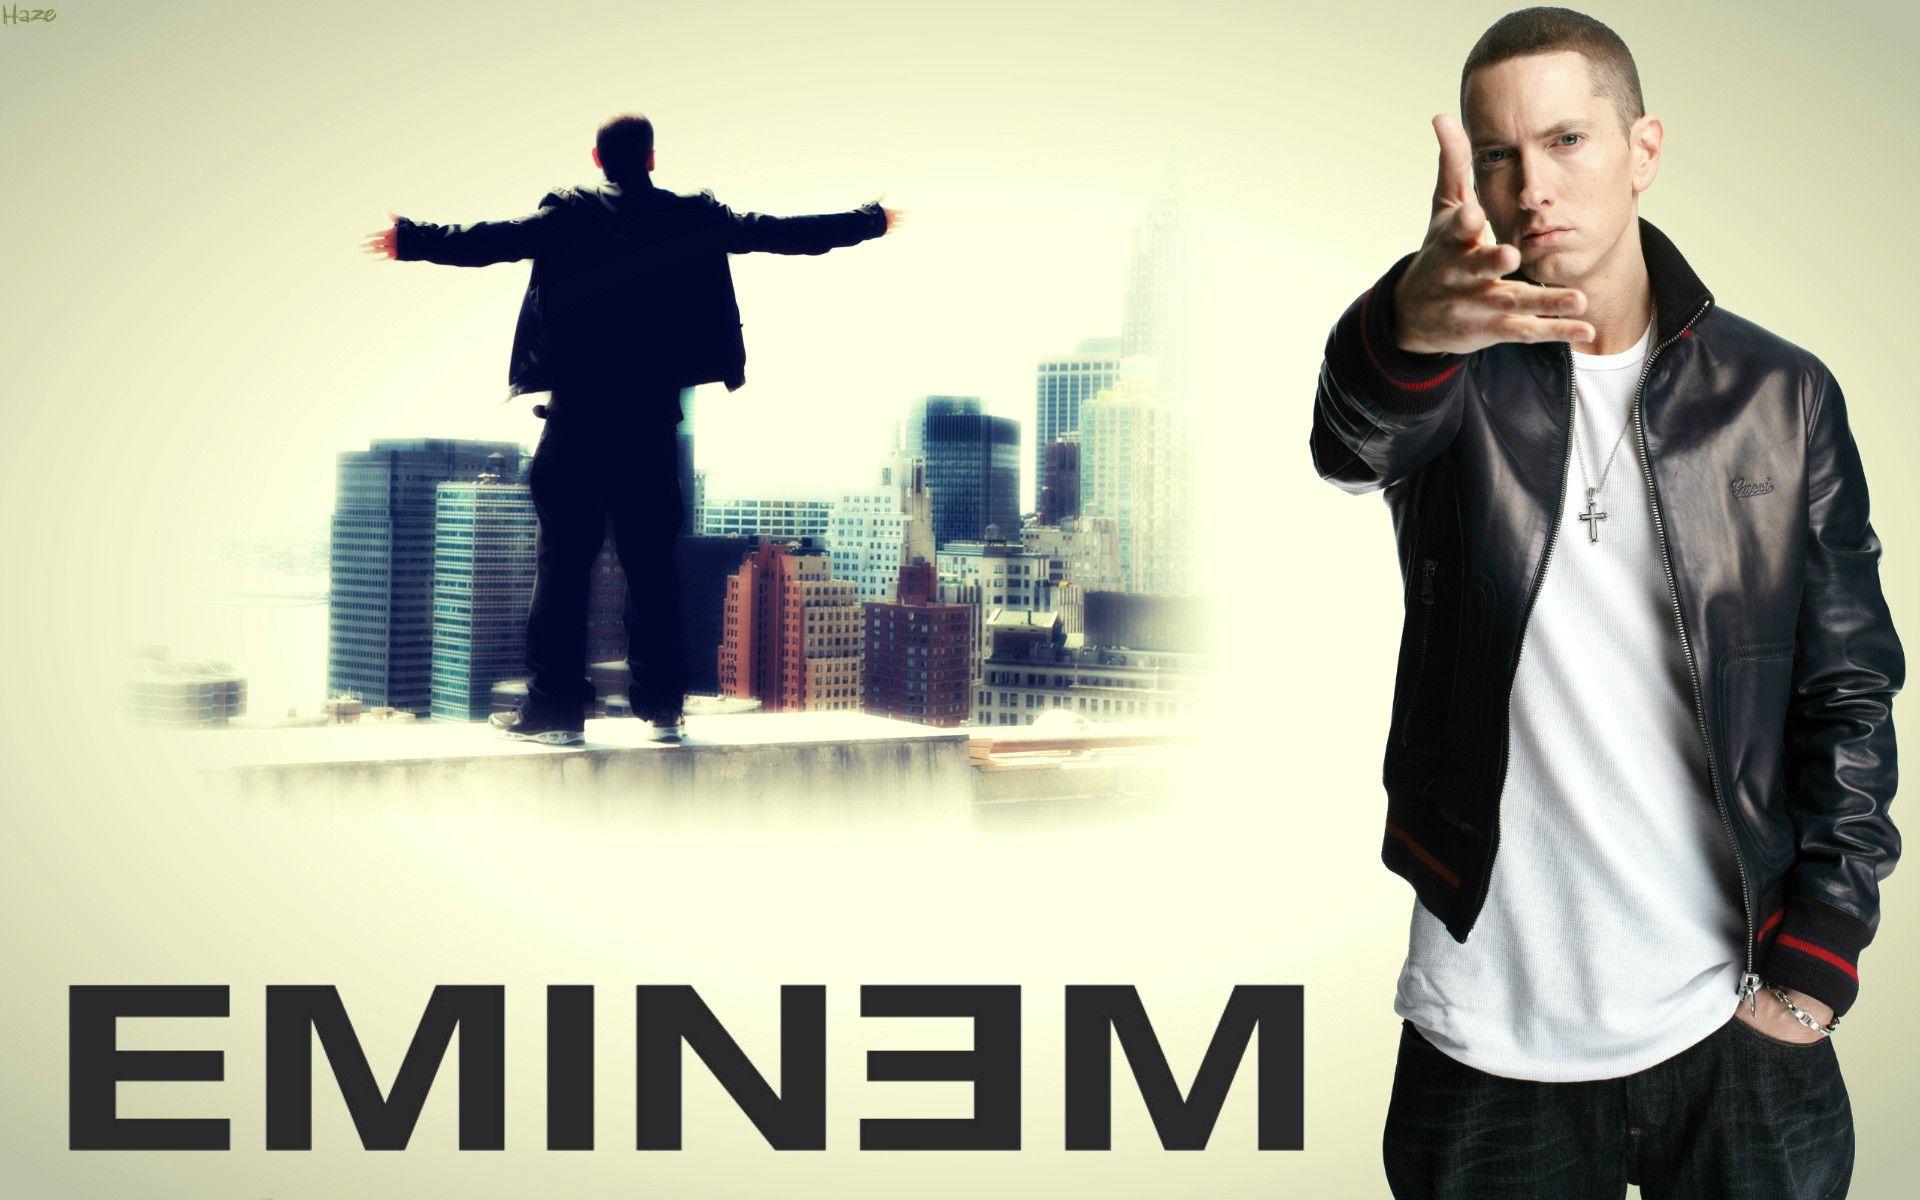 Eminem Wallpaper Background Free Download. Wallpaper